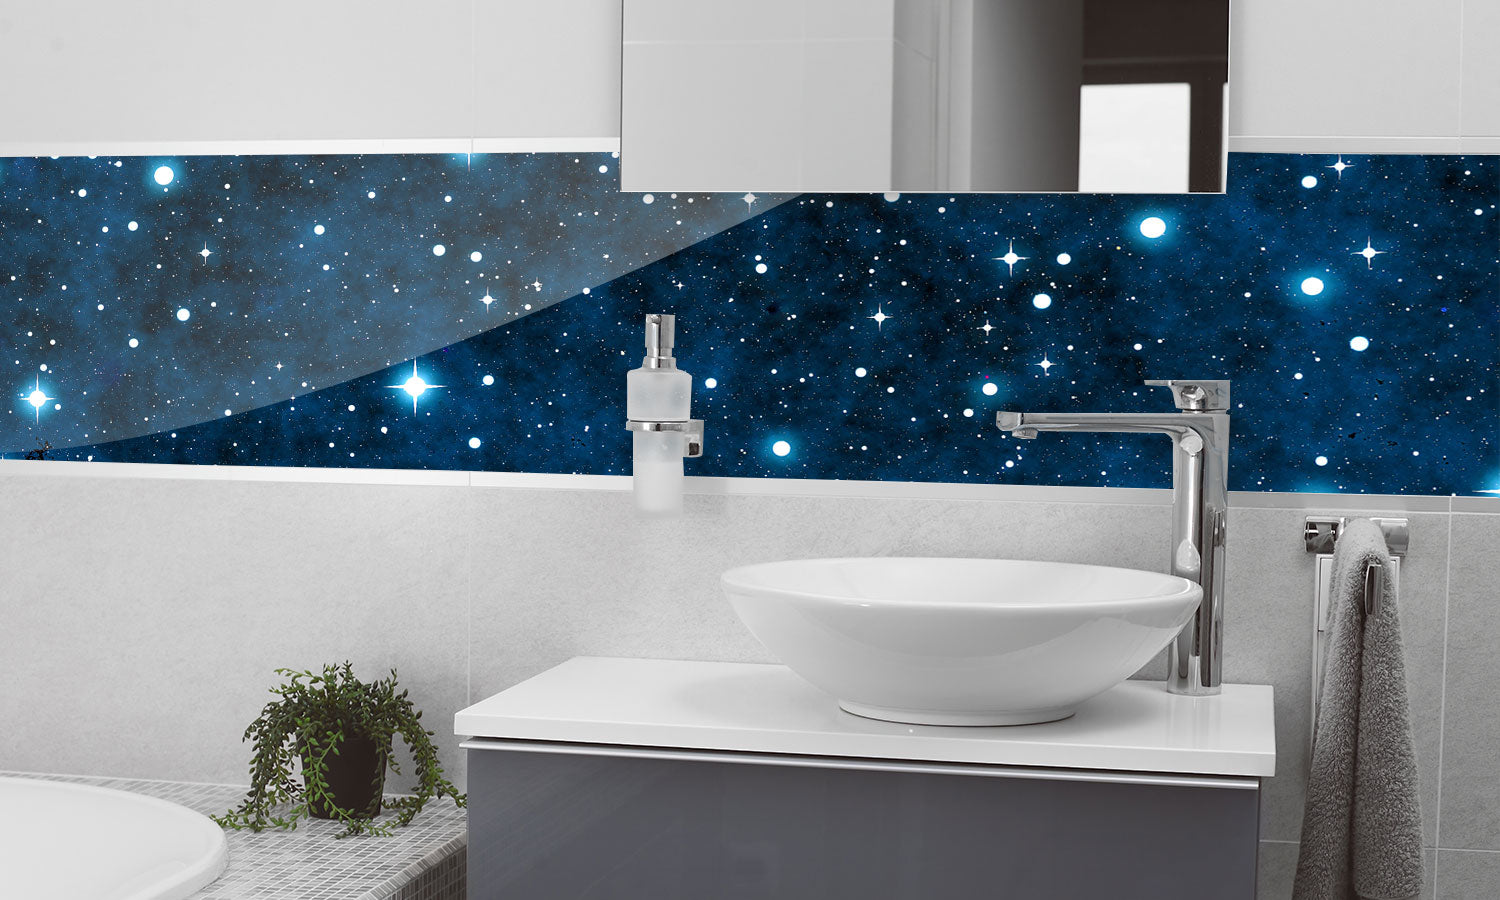 Kuhinjski paneli Night sky with stars - Pleksi steklo - s tiskom za kuhinjo, Stenske obloge PKU0126